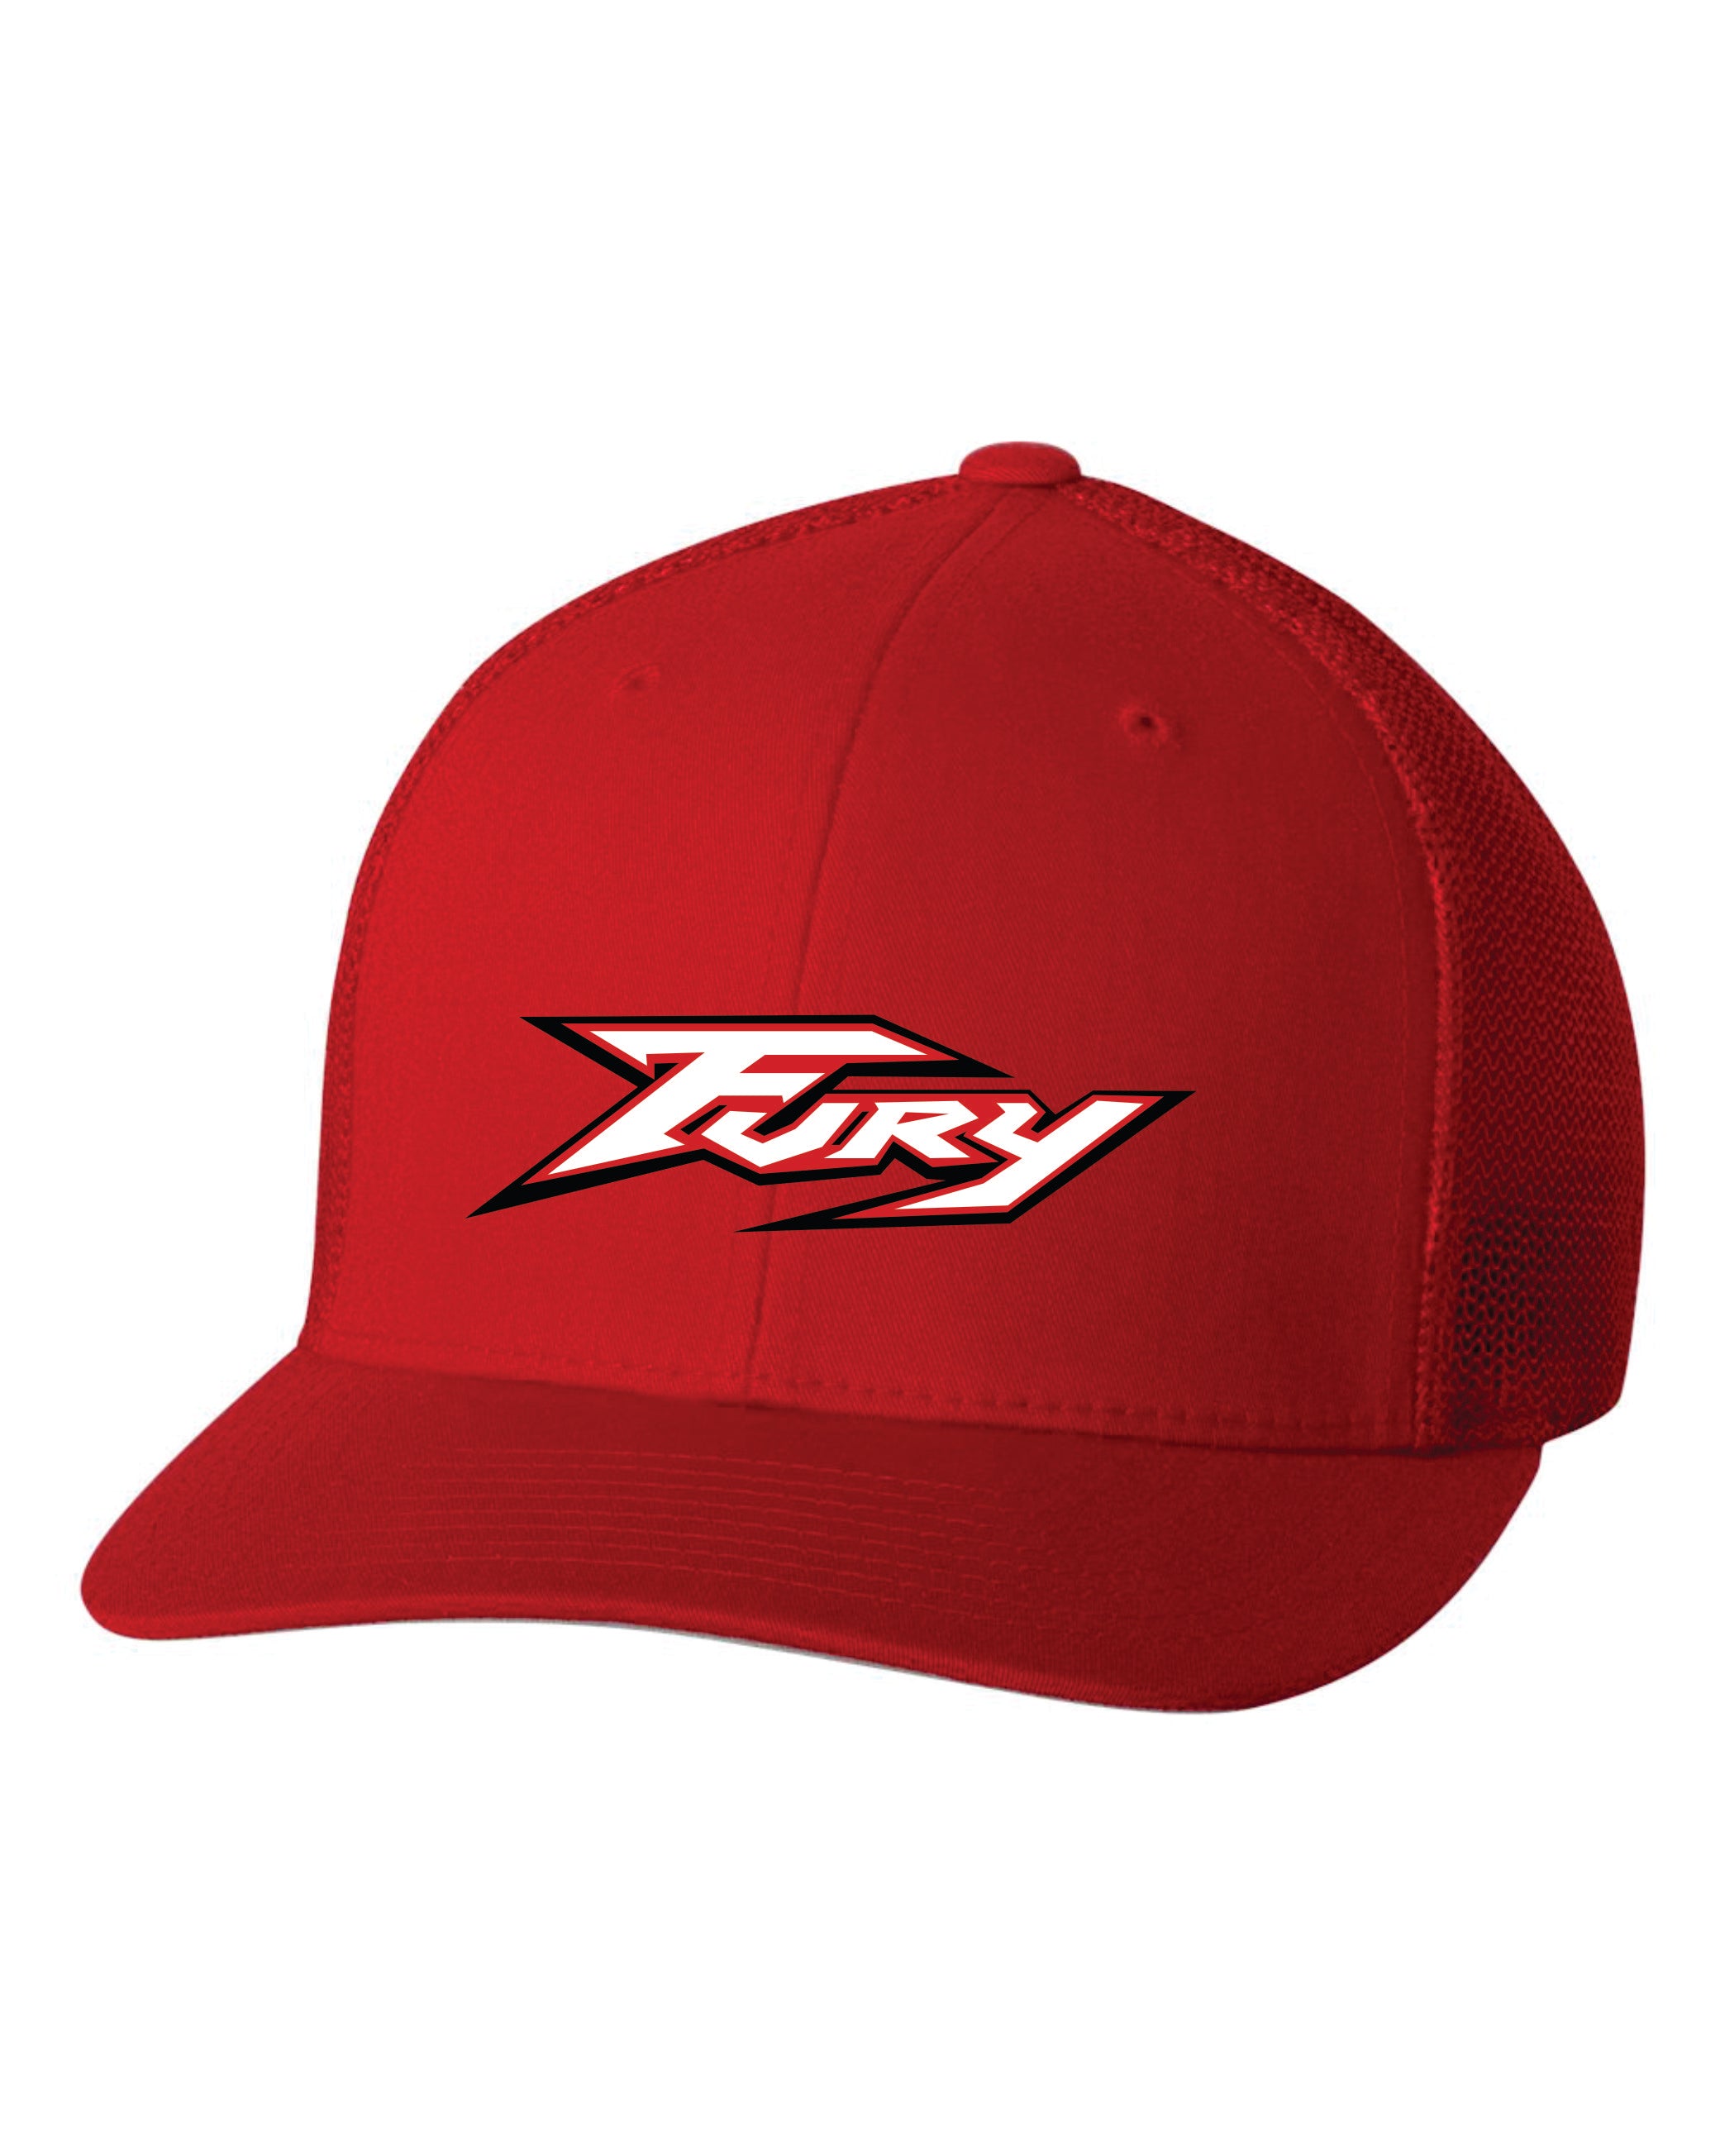 Fury Baseball Snap Back Hat